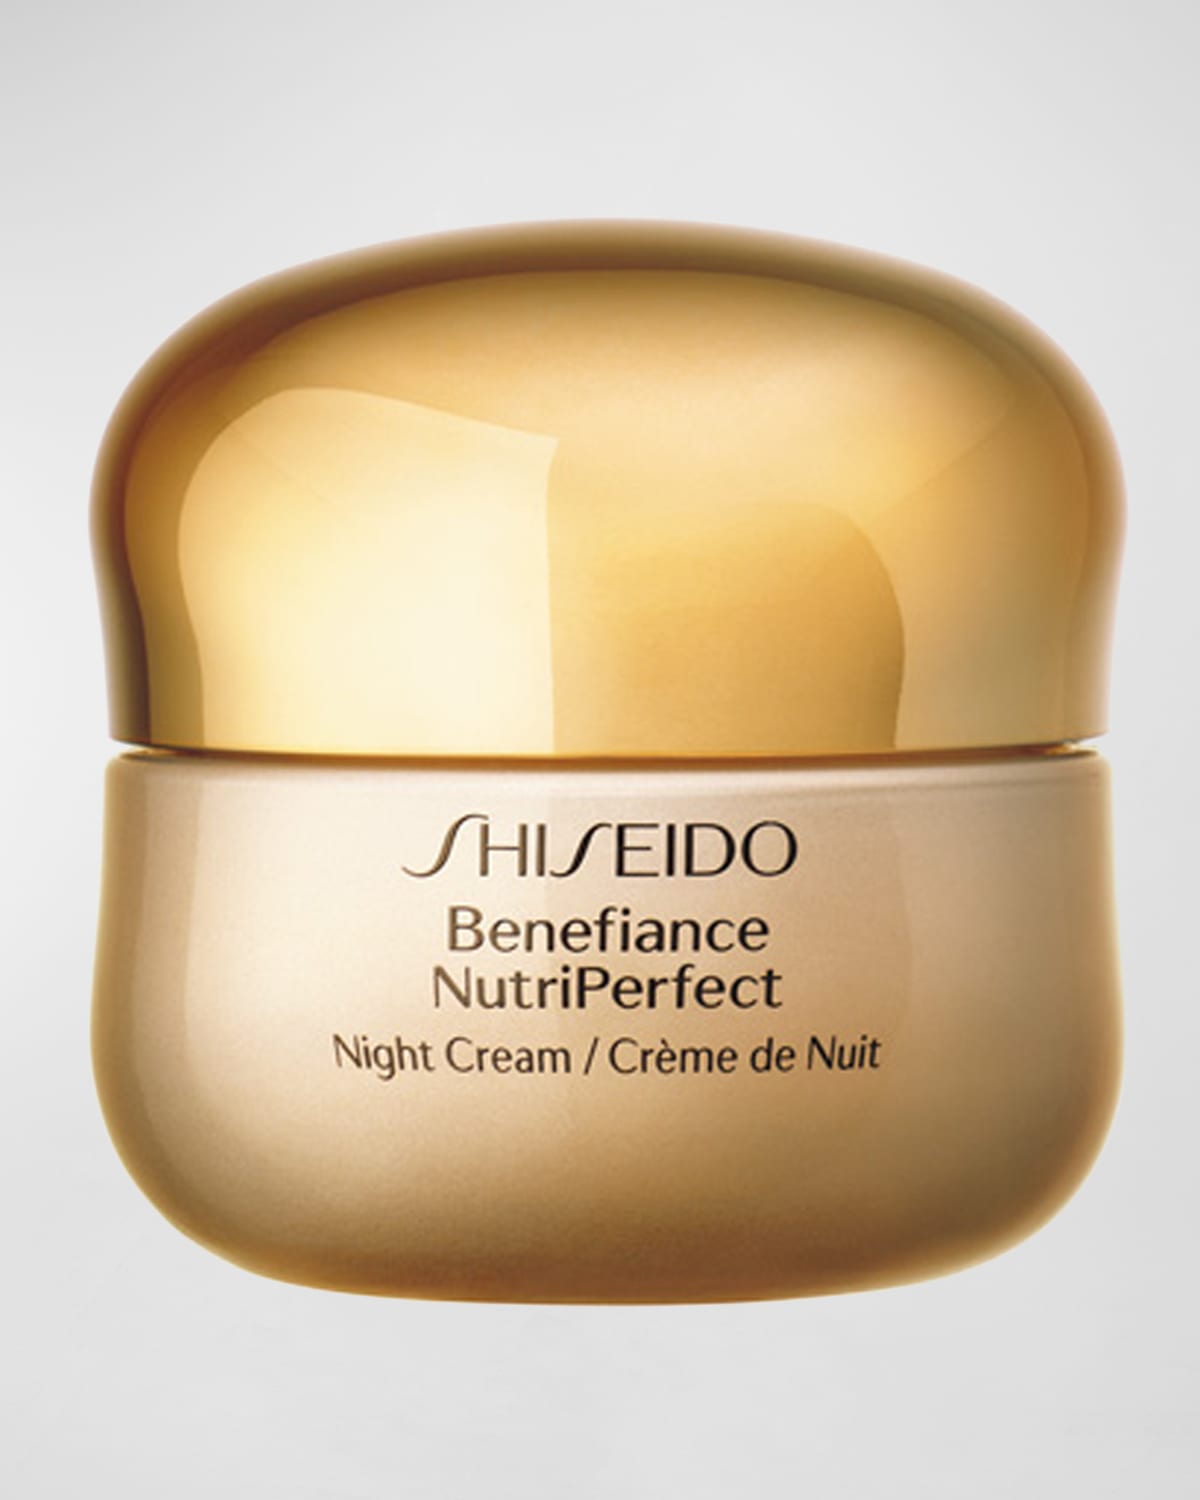 Benefiance NutriPerfect Night Cream, 1.7 oz.